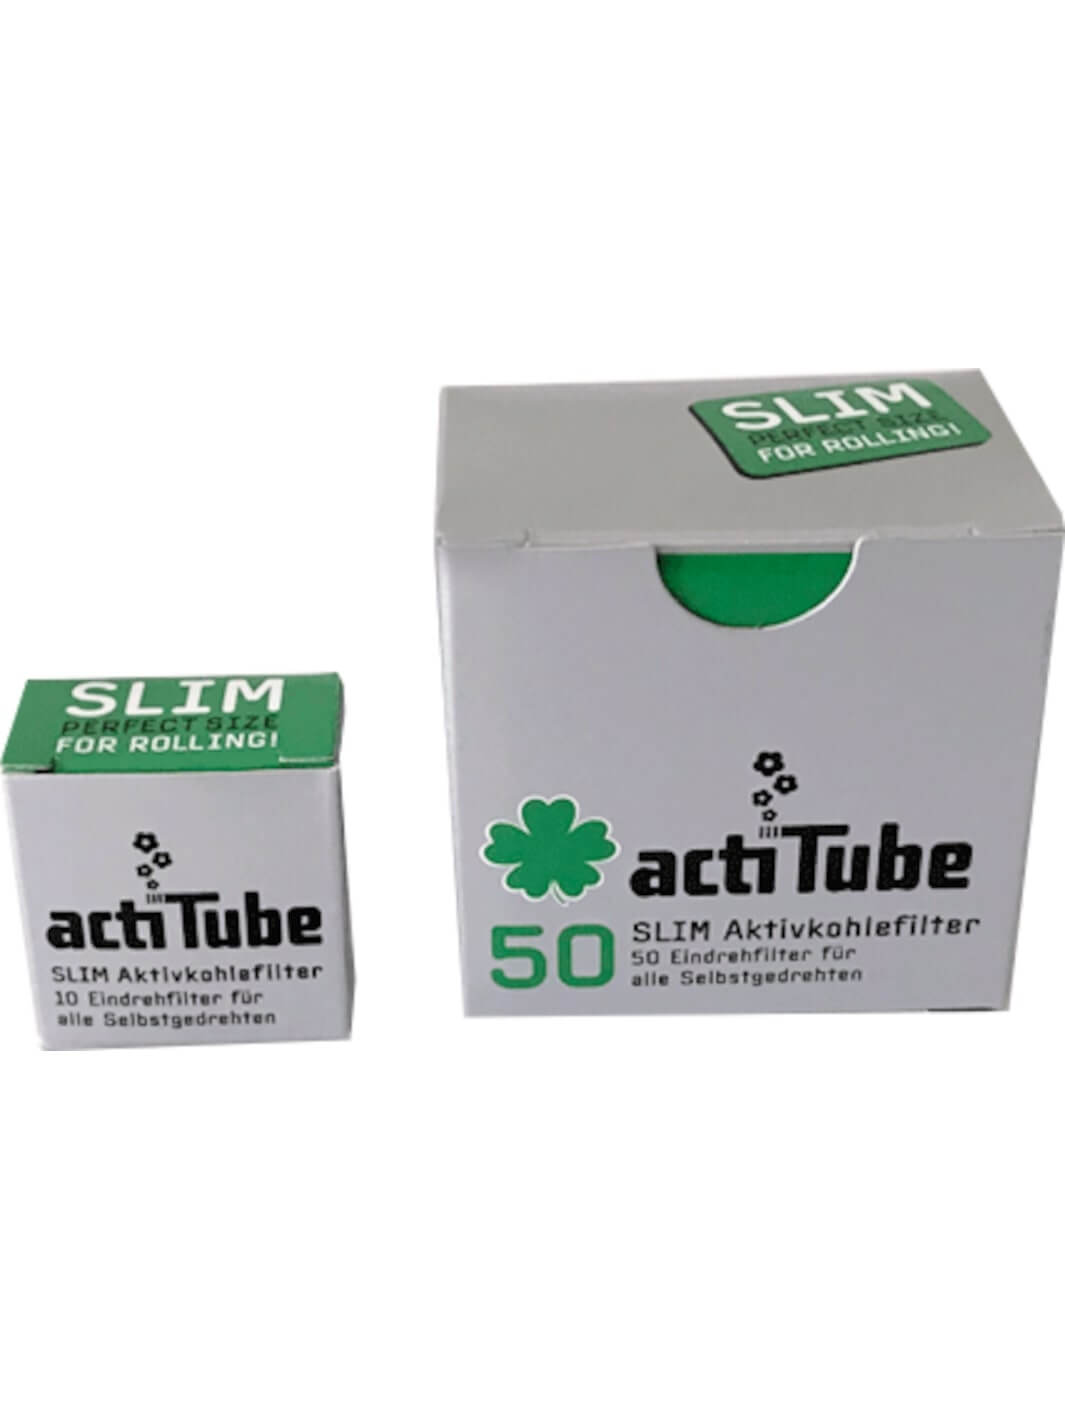 actiTube Aktivkohlefilter Slim Size 7 mm 50 Stück kaufen